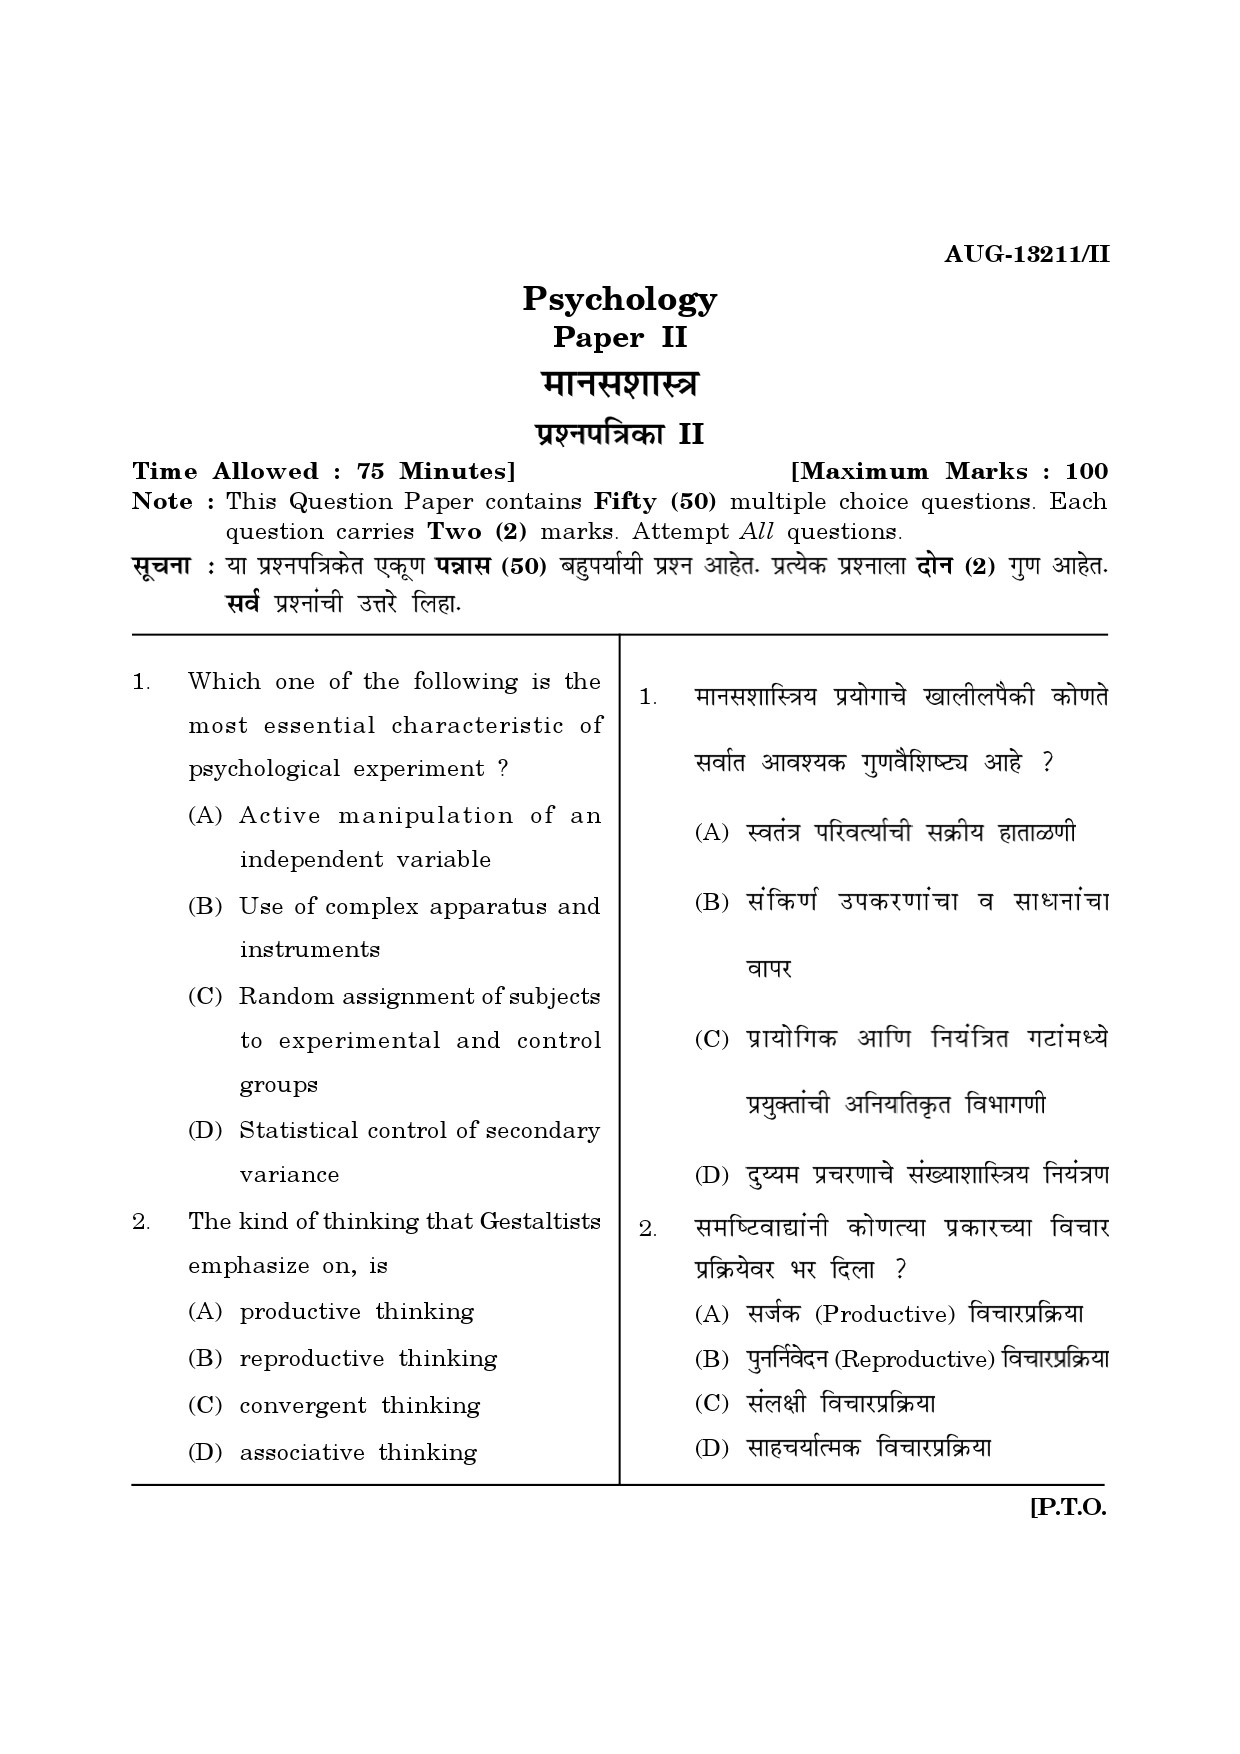 Maharashtra SET Psychology Question Paper II August 2011 1